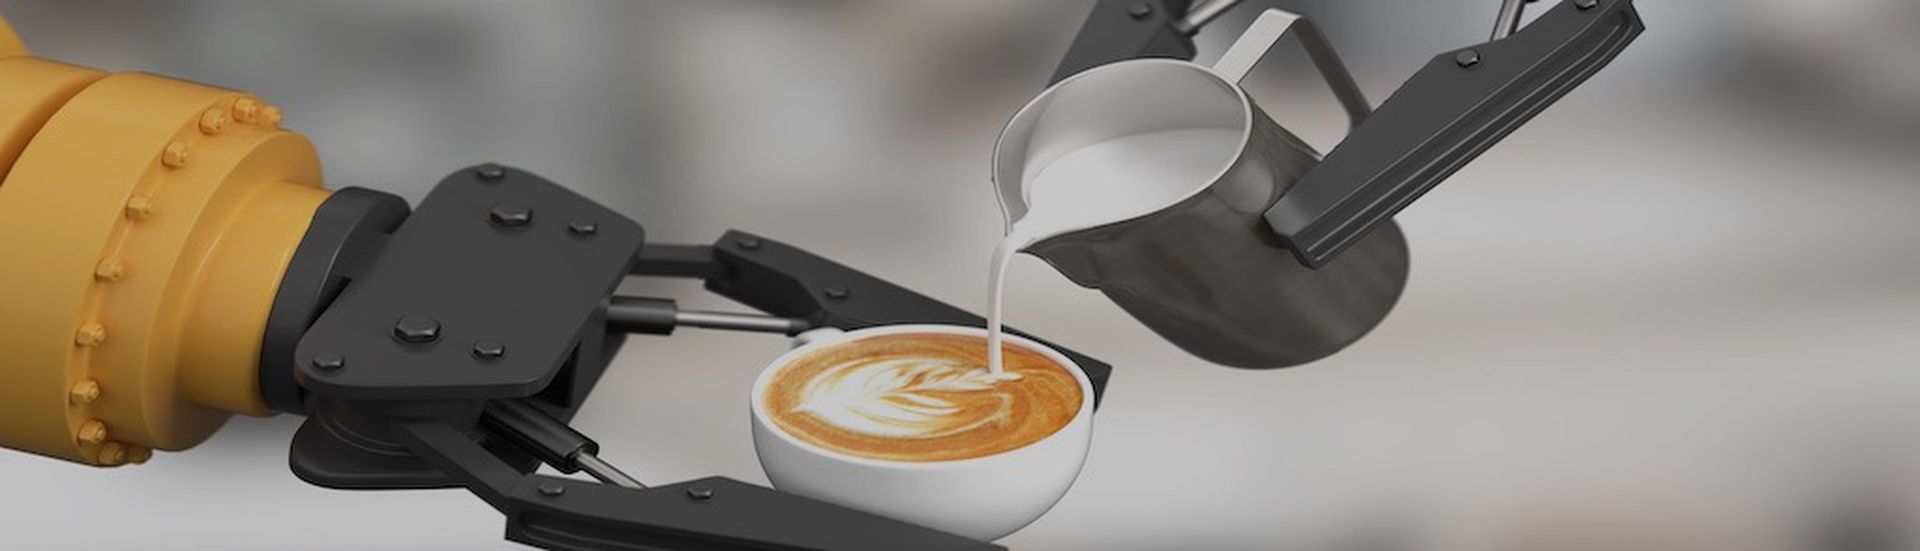 Robotic arm make latte art. 3D illustration